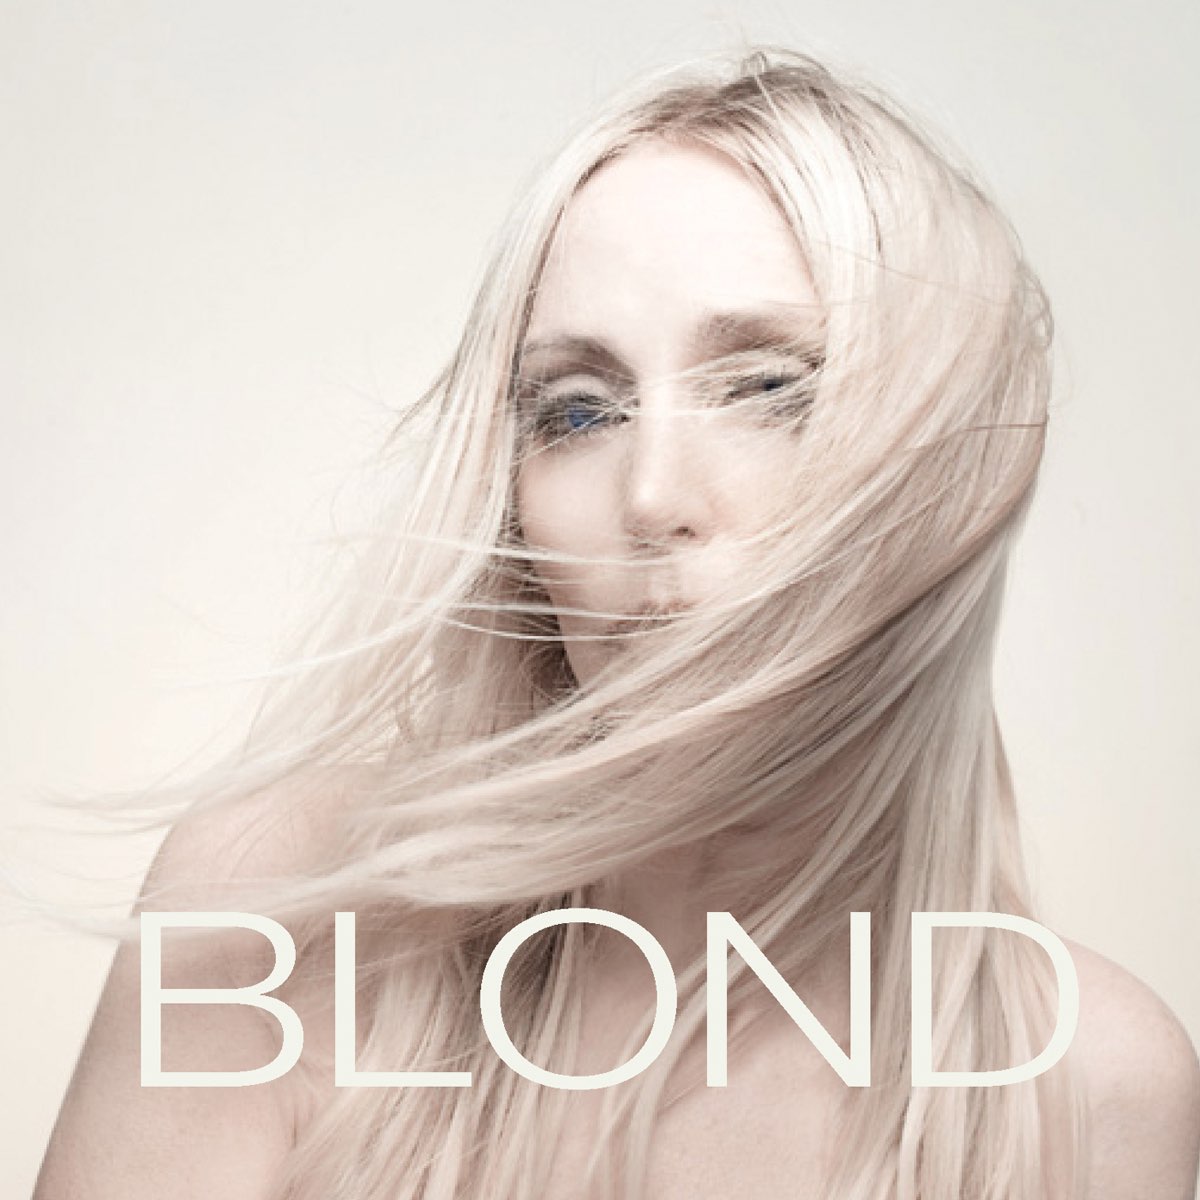 Дед блонд билеты. Слова про блонд. Дид блонд. Dead blonde певица. Блонд на миллион.